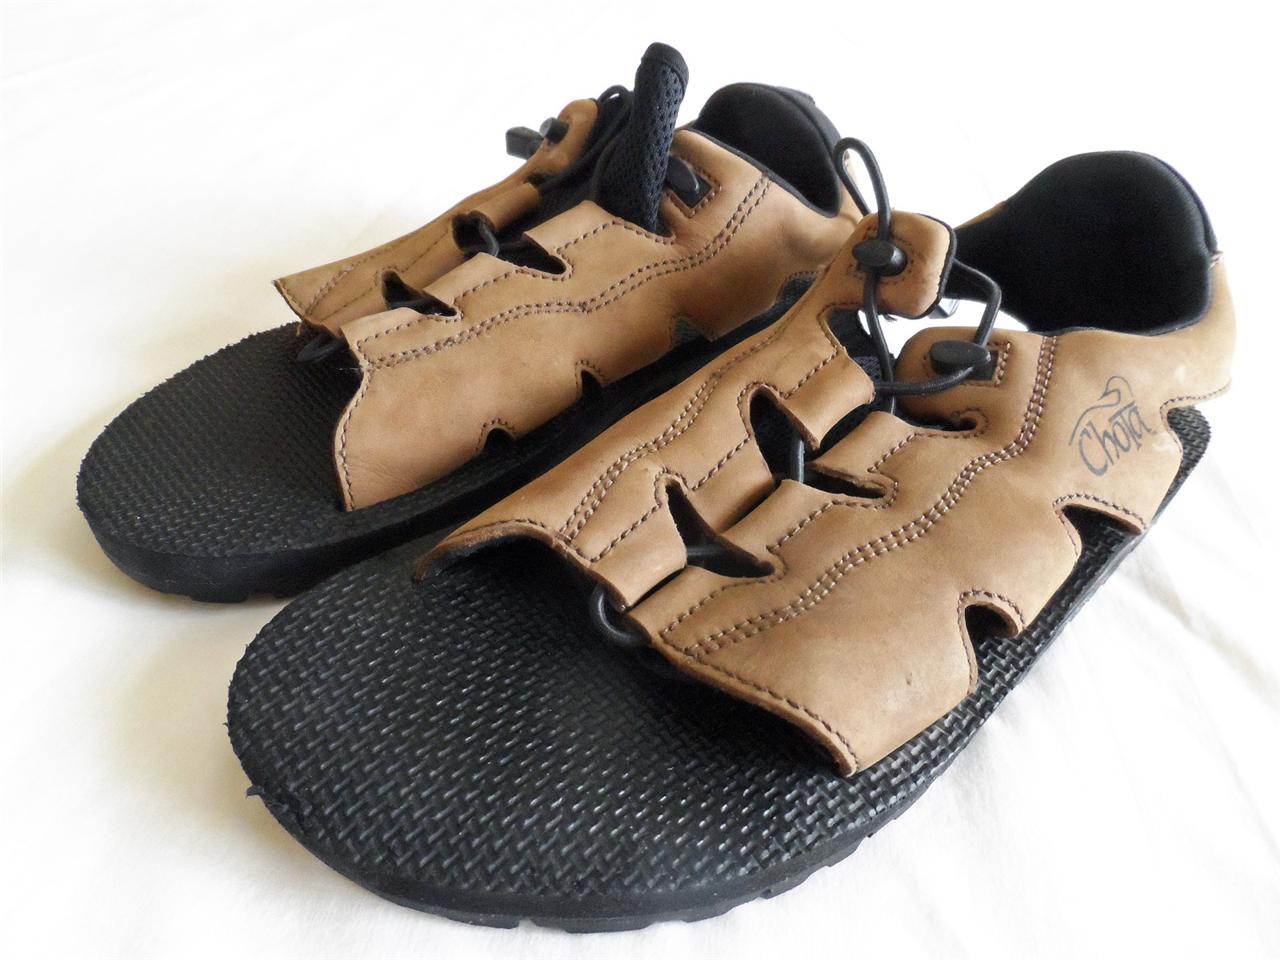 Chota Wading Sandals, US Men's Size 11 - FlyMasters TradeUp | eBay